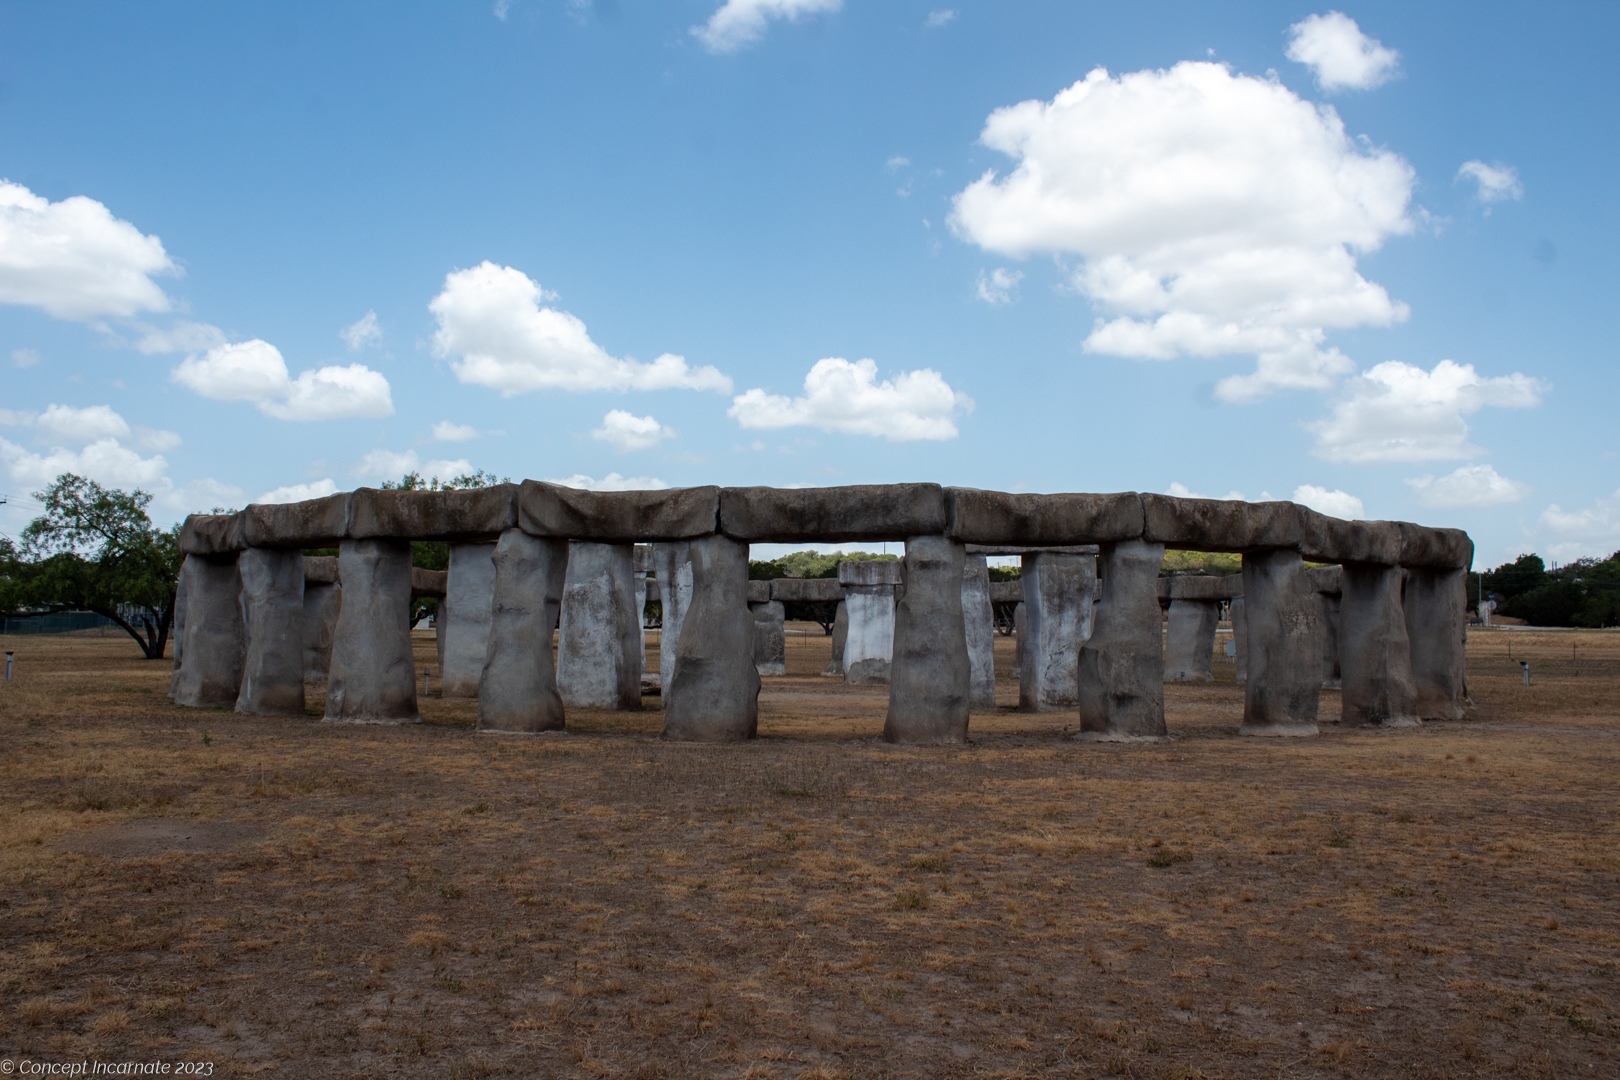 Texas Stonehenge from afar